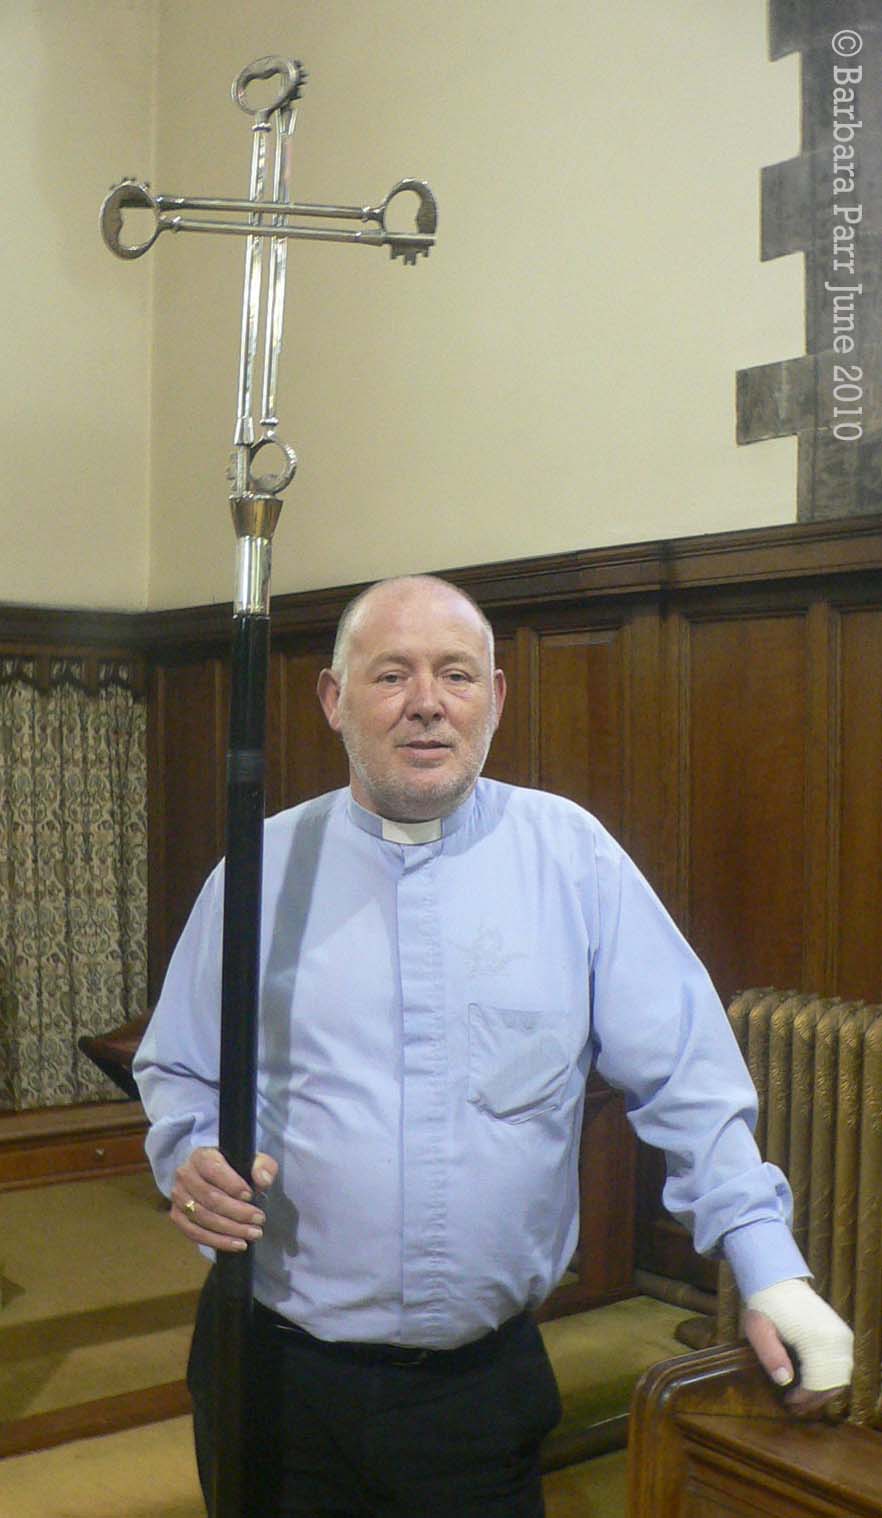 The late Revd. Stephen Mather (Vicar 1999-2013) holding a cross representing St Peter's keys